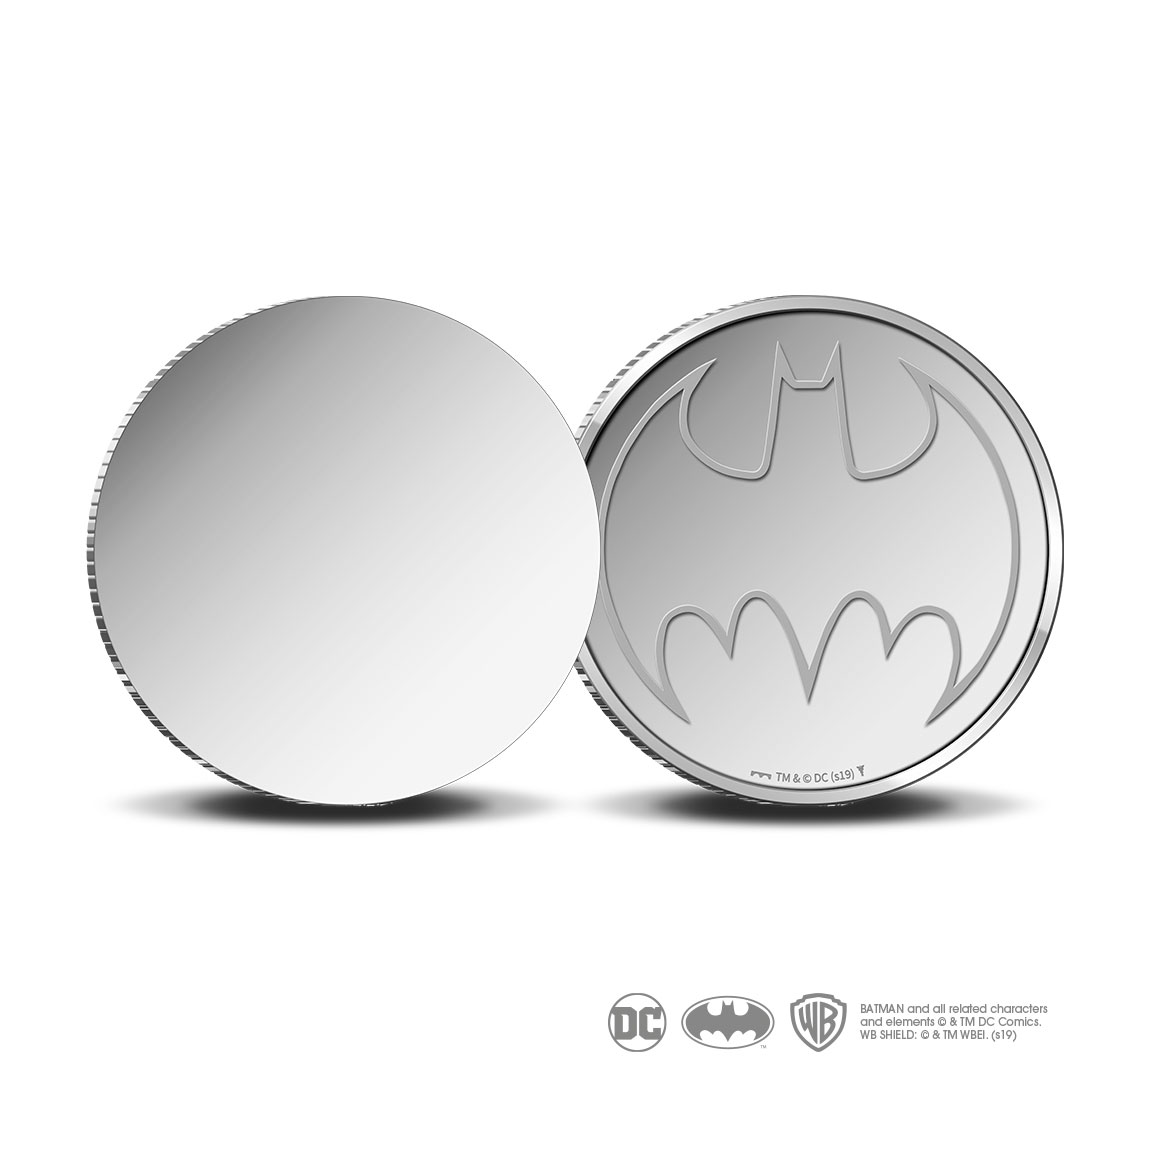 Batman pice de collection rflchissante Mirror Coin Bat-Signal